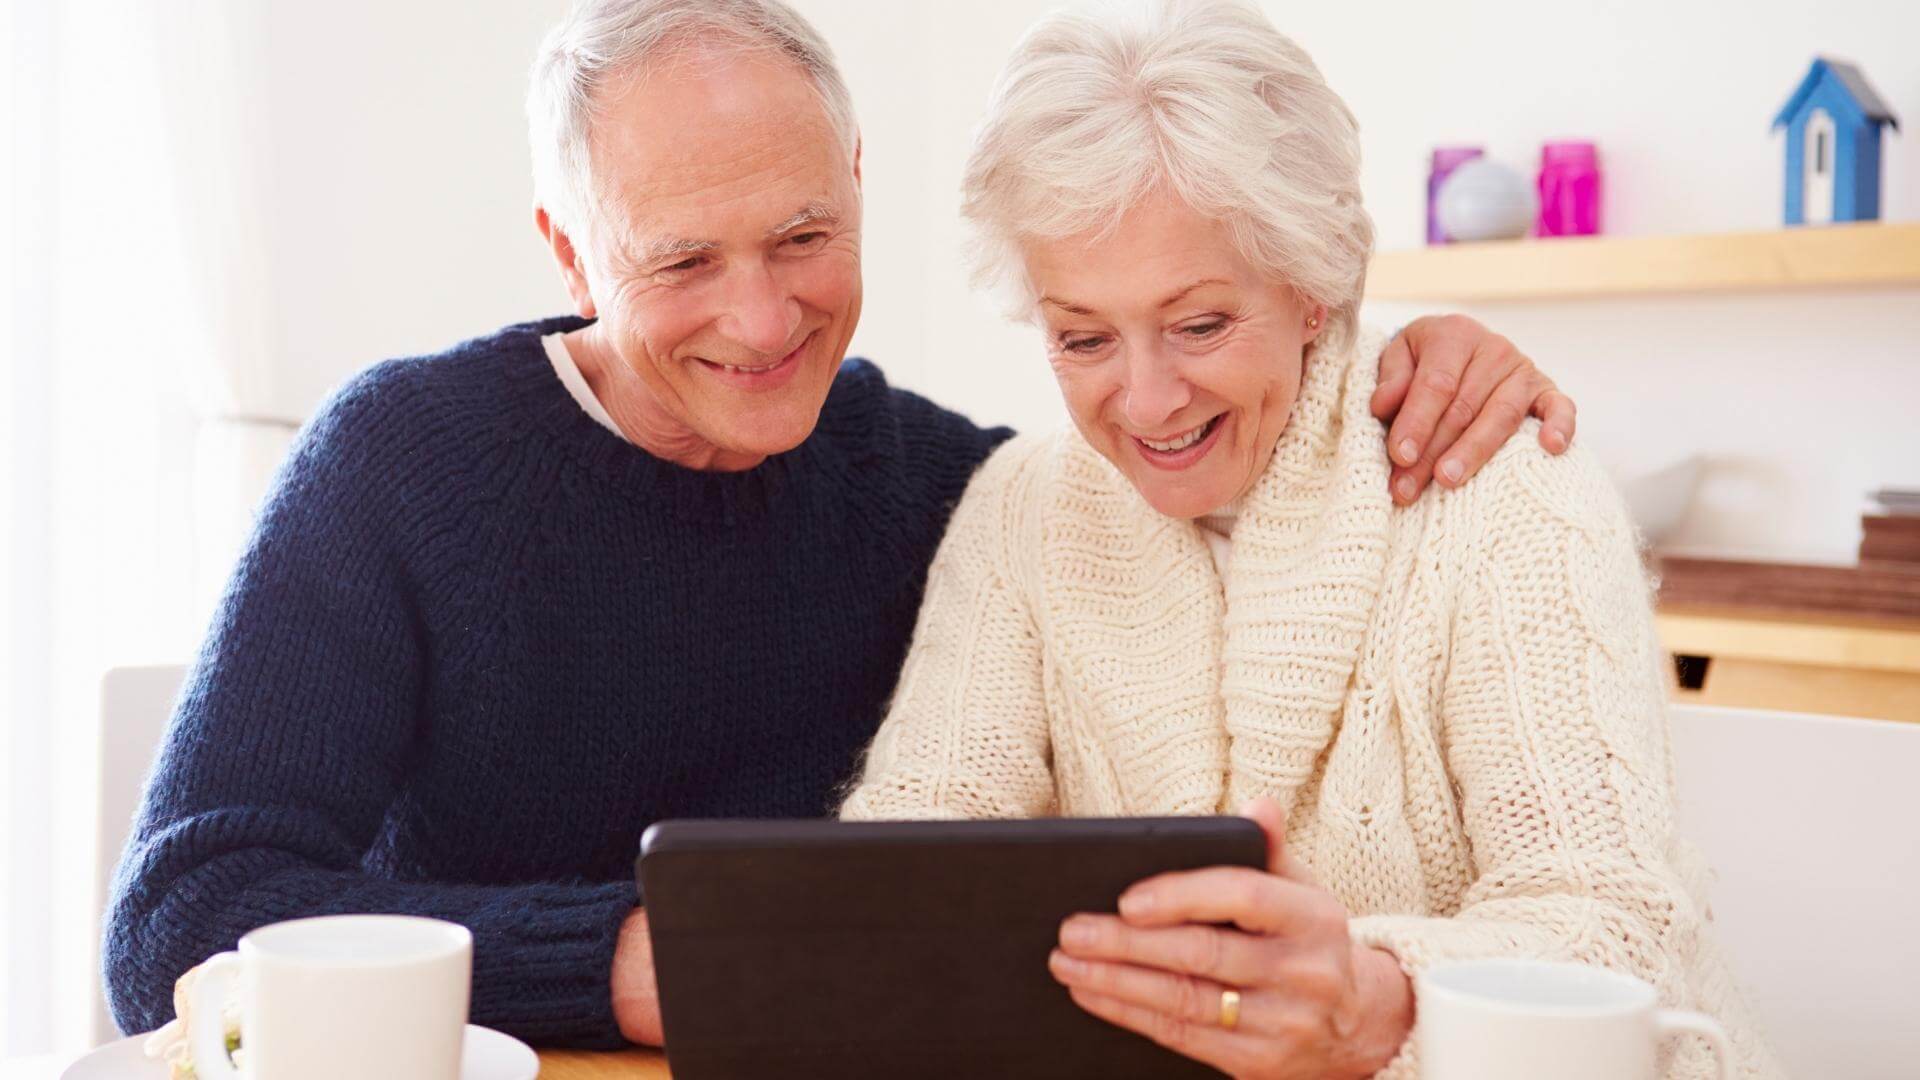 Seniors checking medicare plan comparison on tablet - BBI